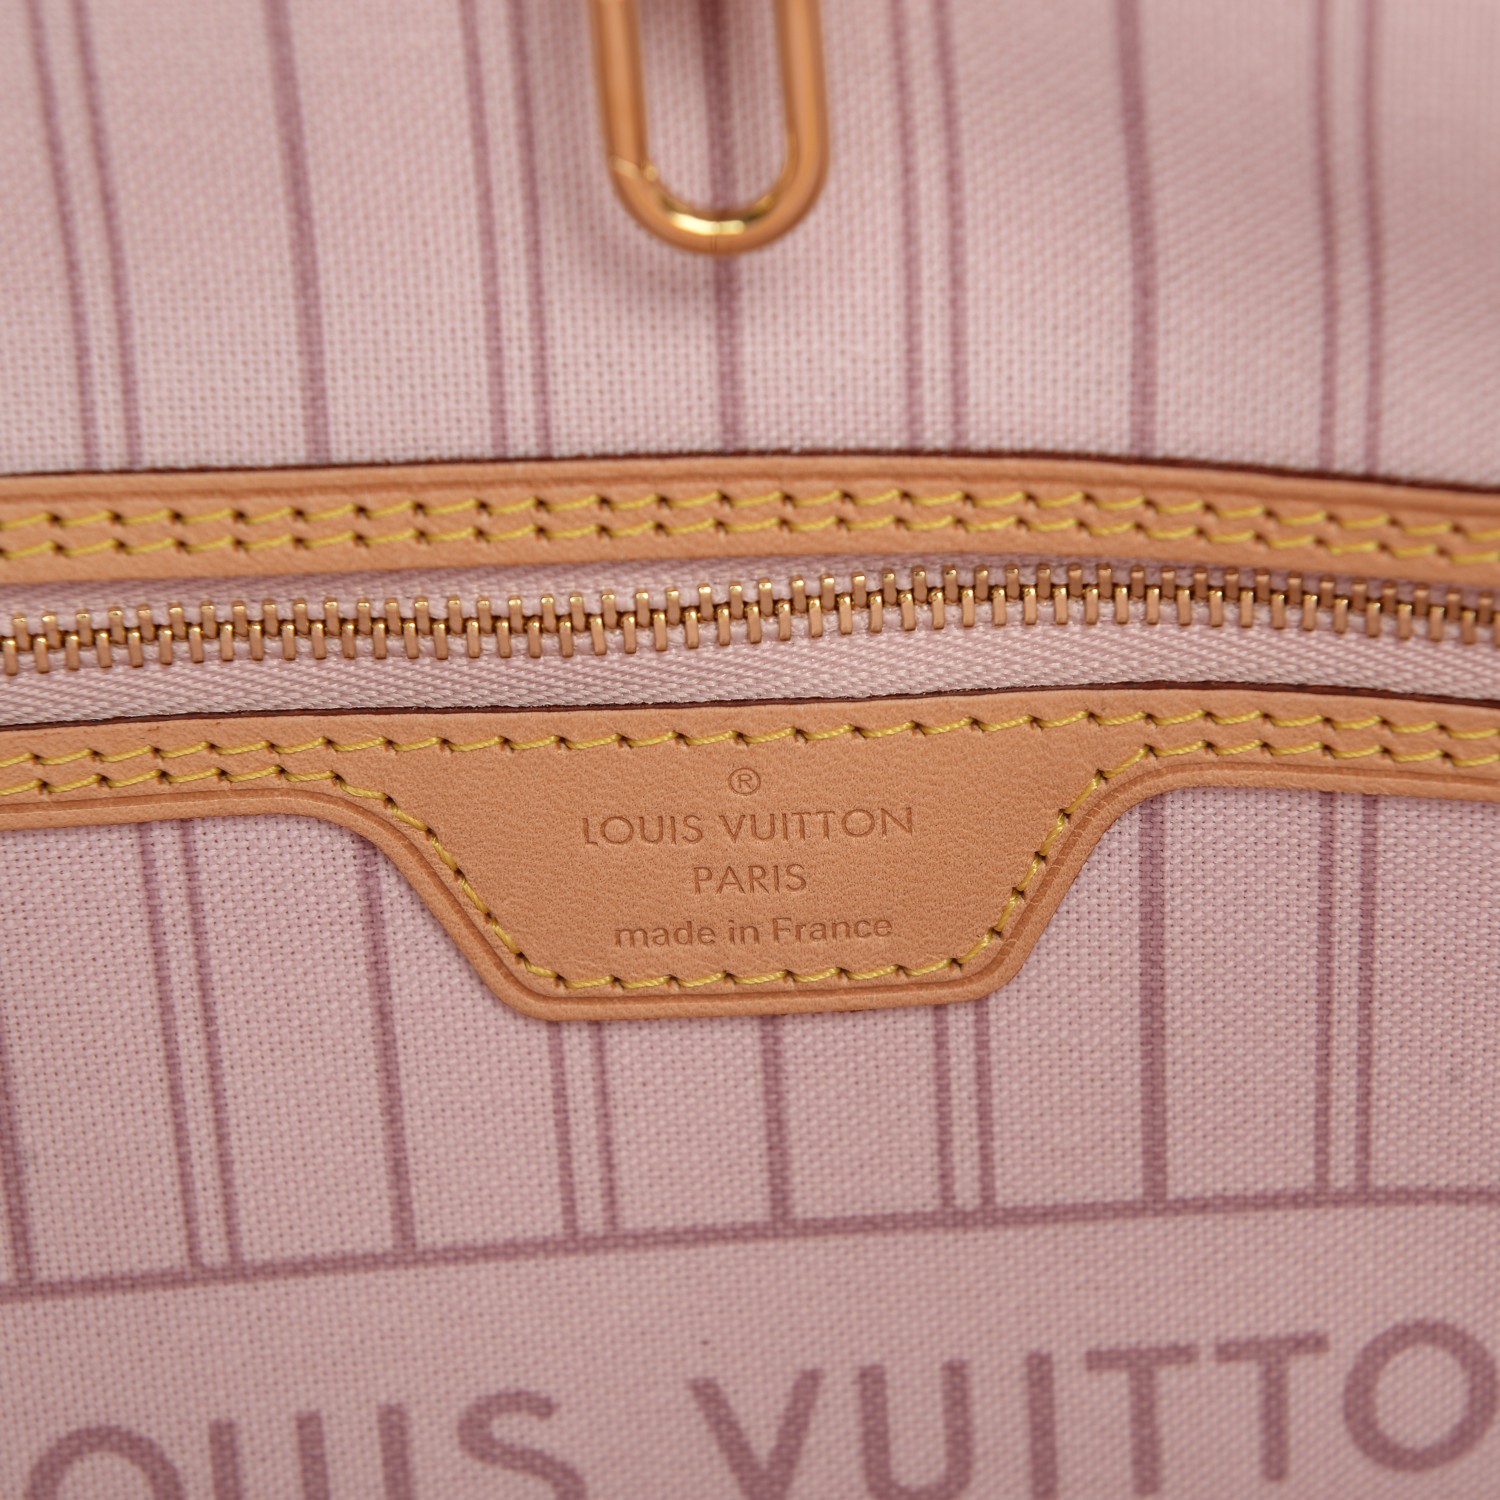 Louis Vuitton Cheaper In Maui Hotels | semashow.com